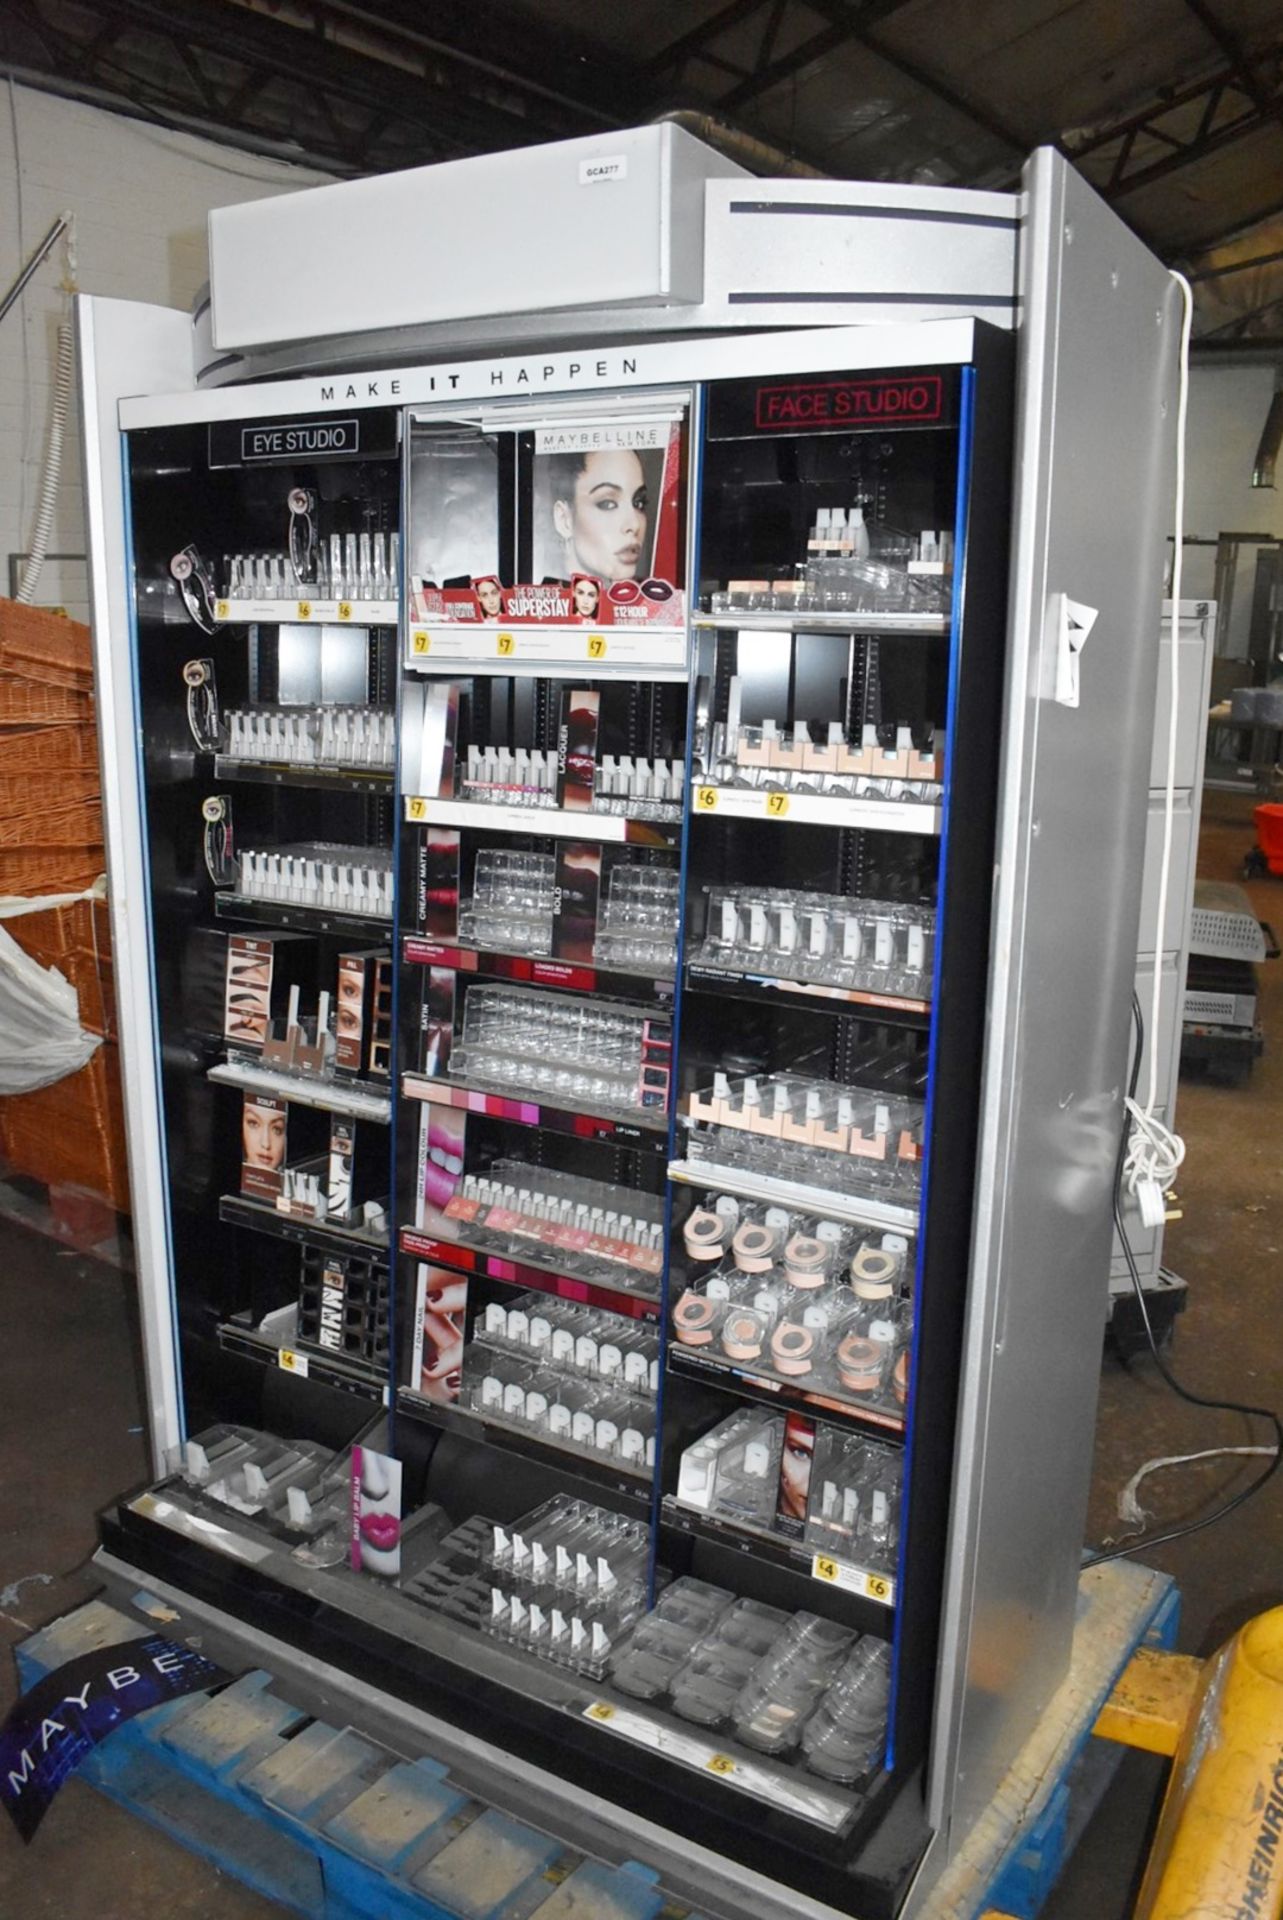 1 x Large Freestanding Make Up & Beauty Illuminated Retail Display Unit - Make it Happen Eye and - Image 16 of 16